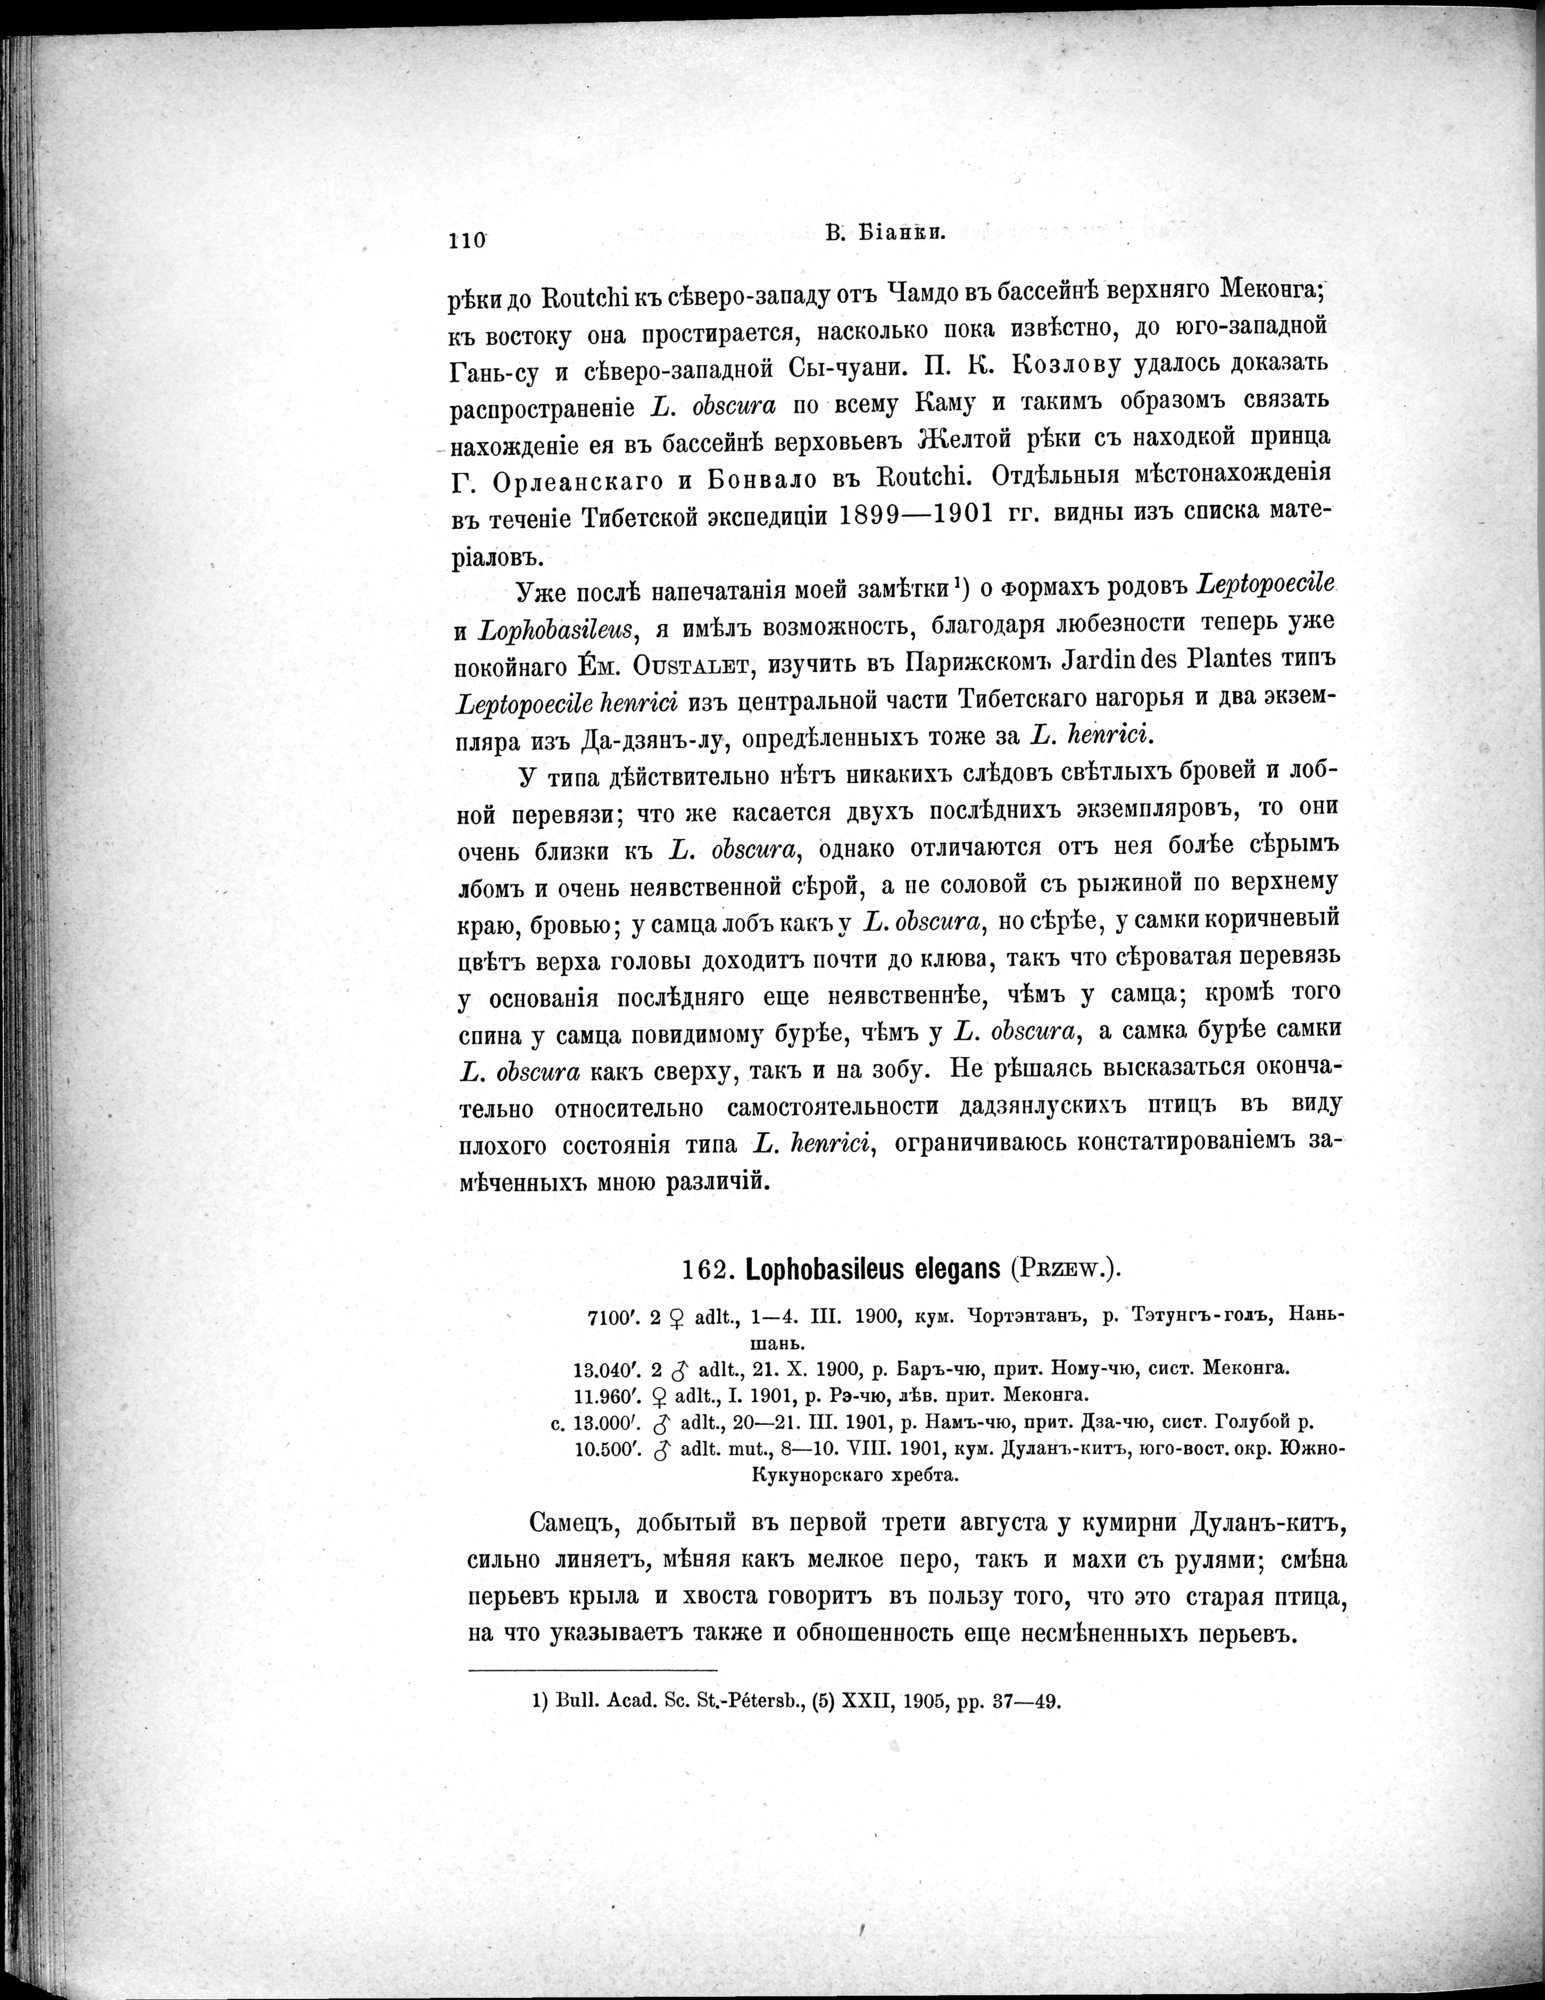 Mongoliia i Kam : vol.5 / Page 182 (Grayscale High Resolution Image)